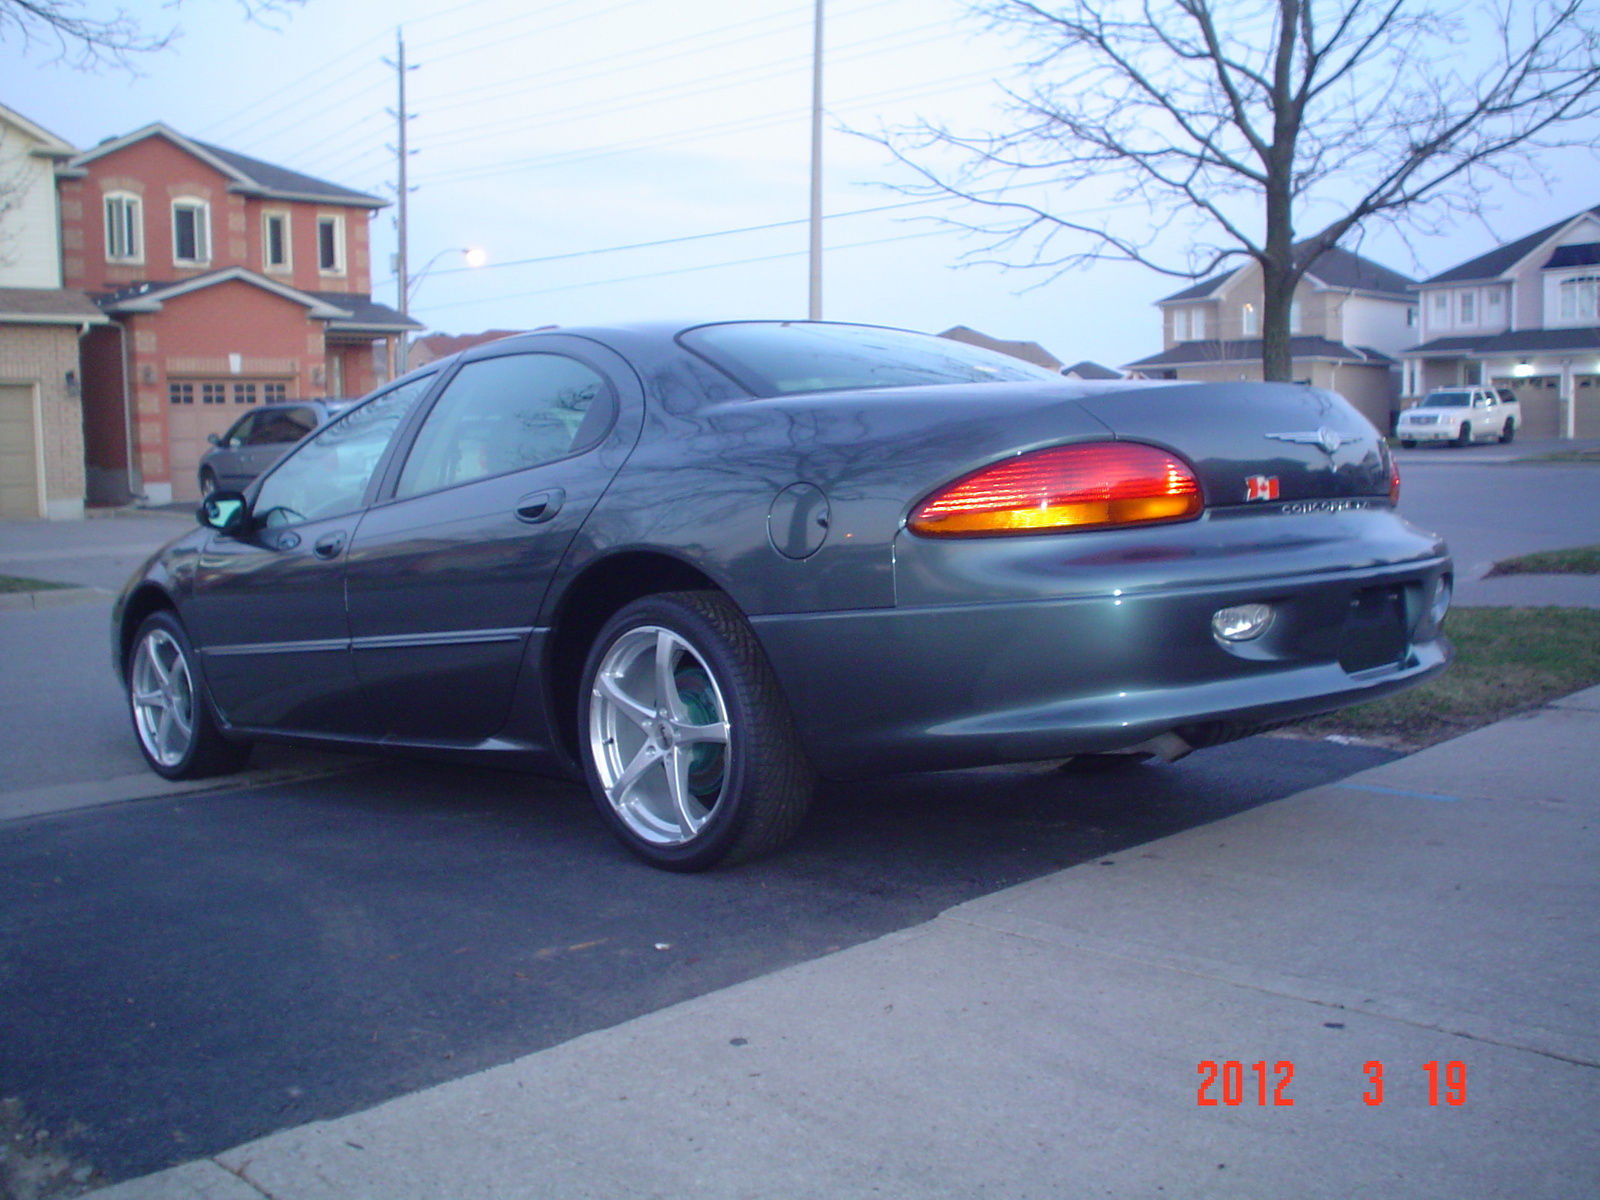 2002 Chrysler concorde aftermarket parts #3